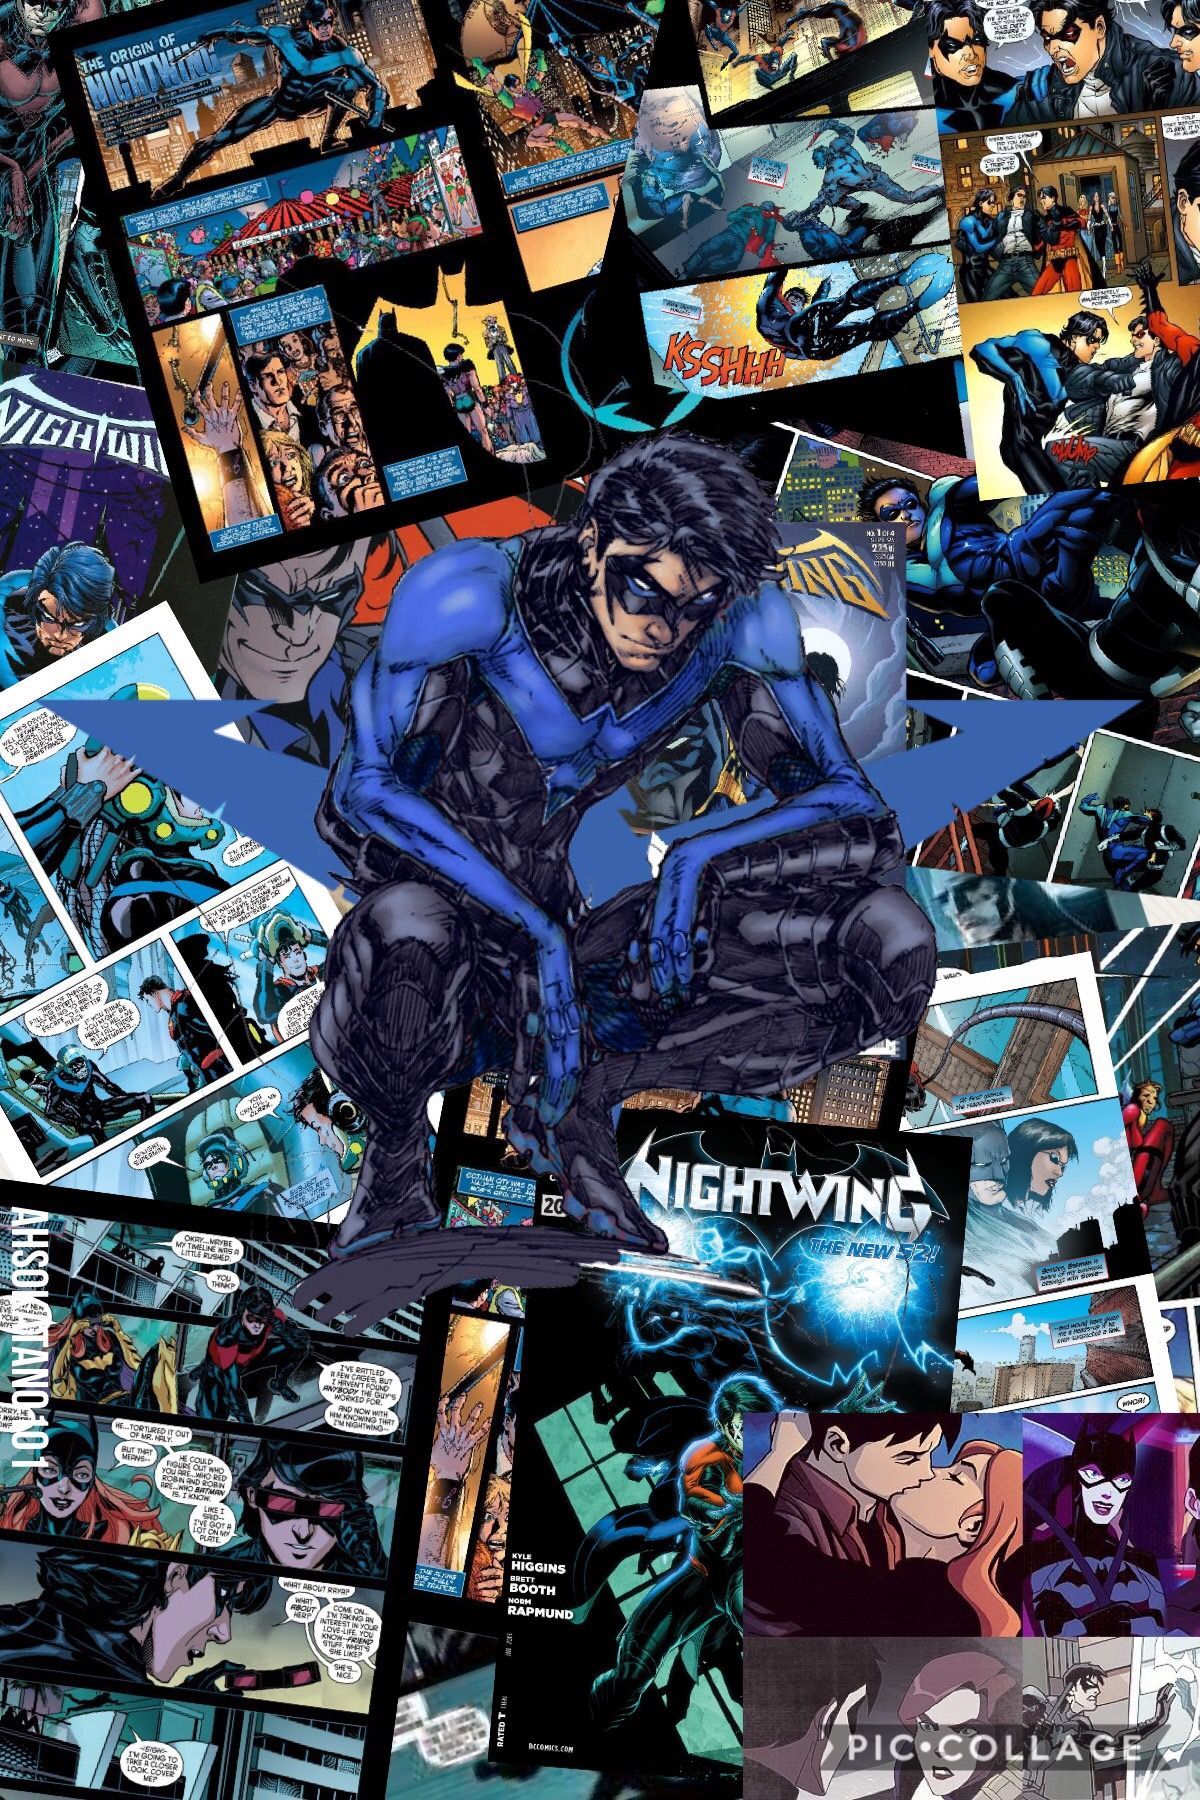 Nightwing wallpaper.com